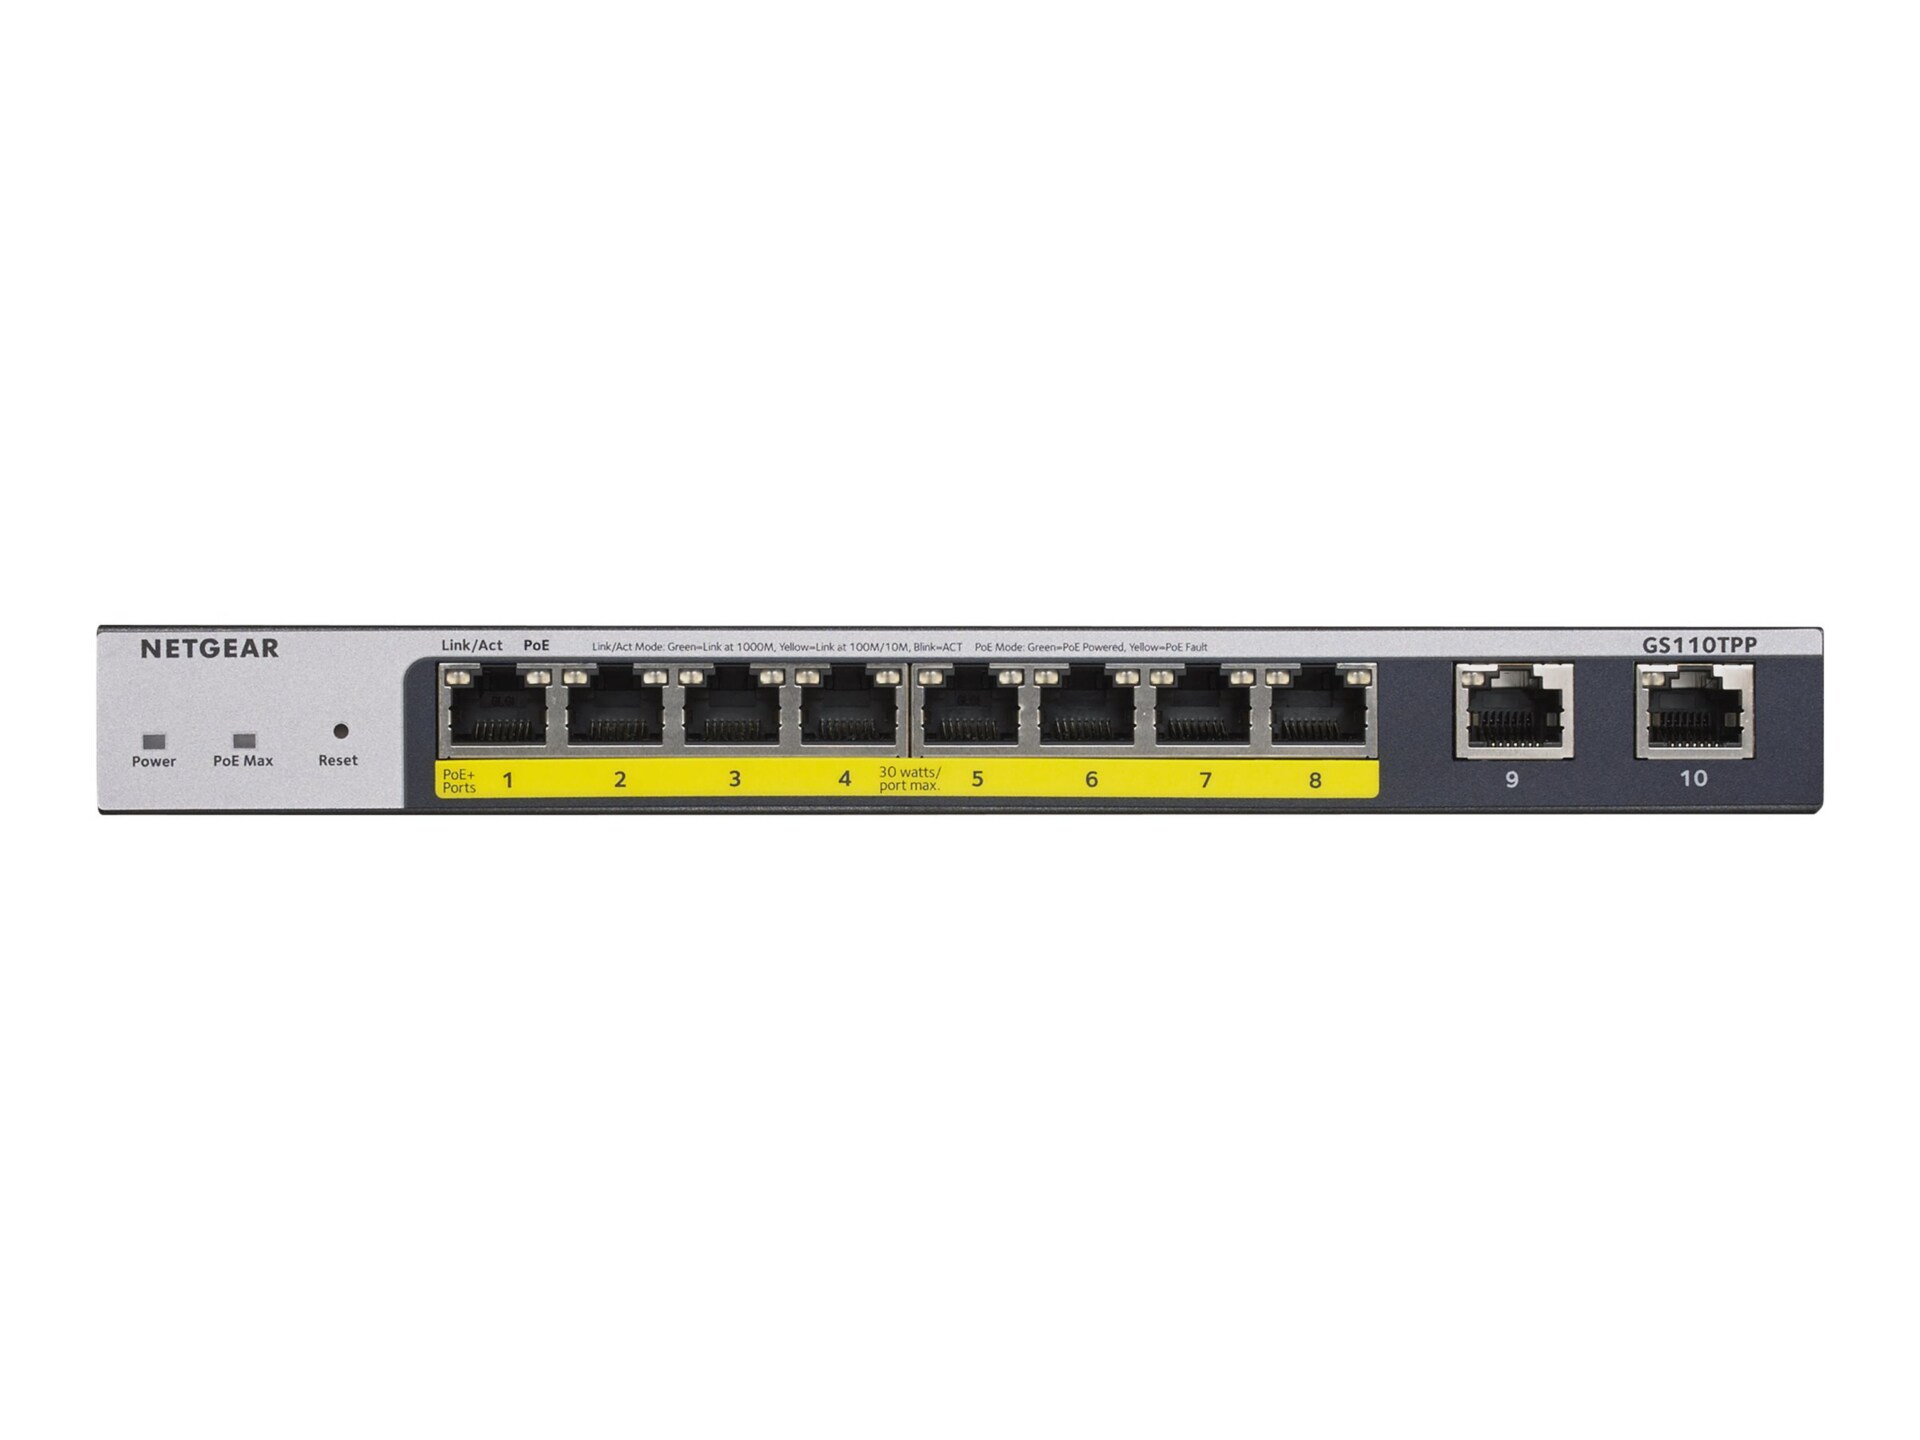 NETGEAR 8-Port Gig PoE+ Ethernet Smart Pro Switch, 2 Copper port (GS110TPP)